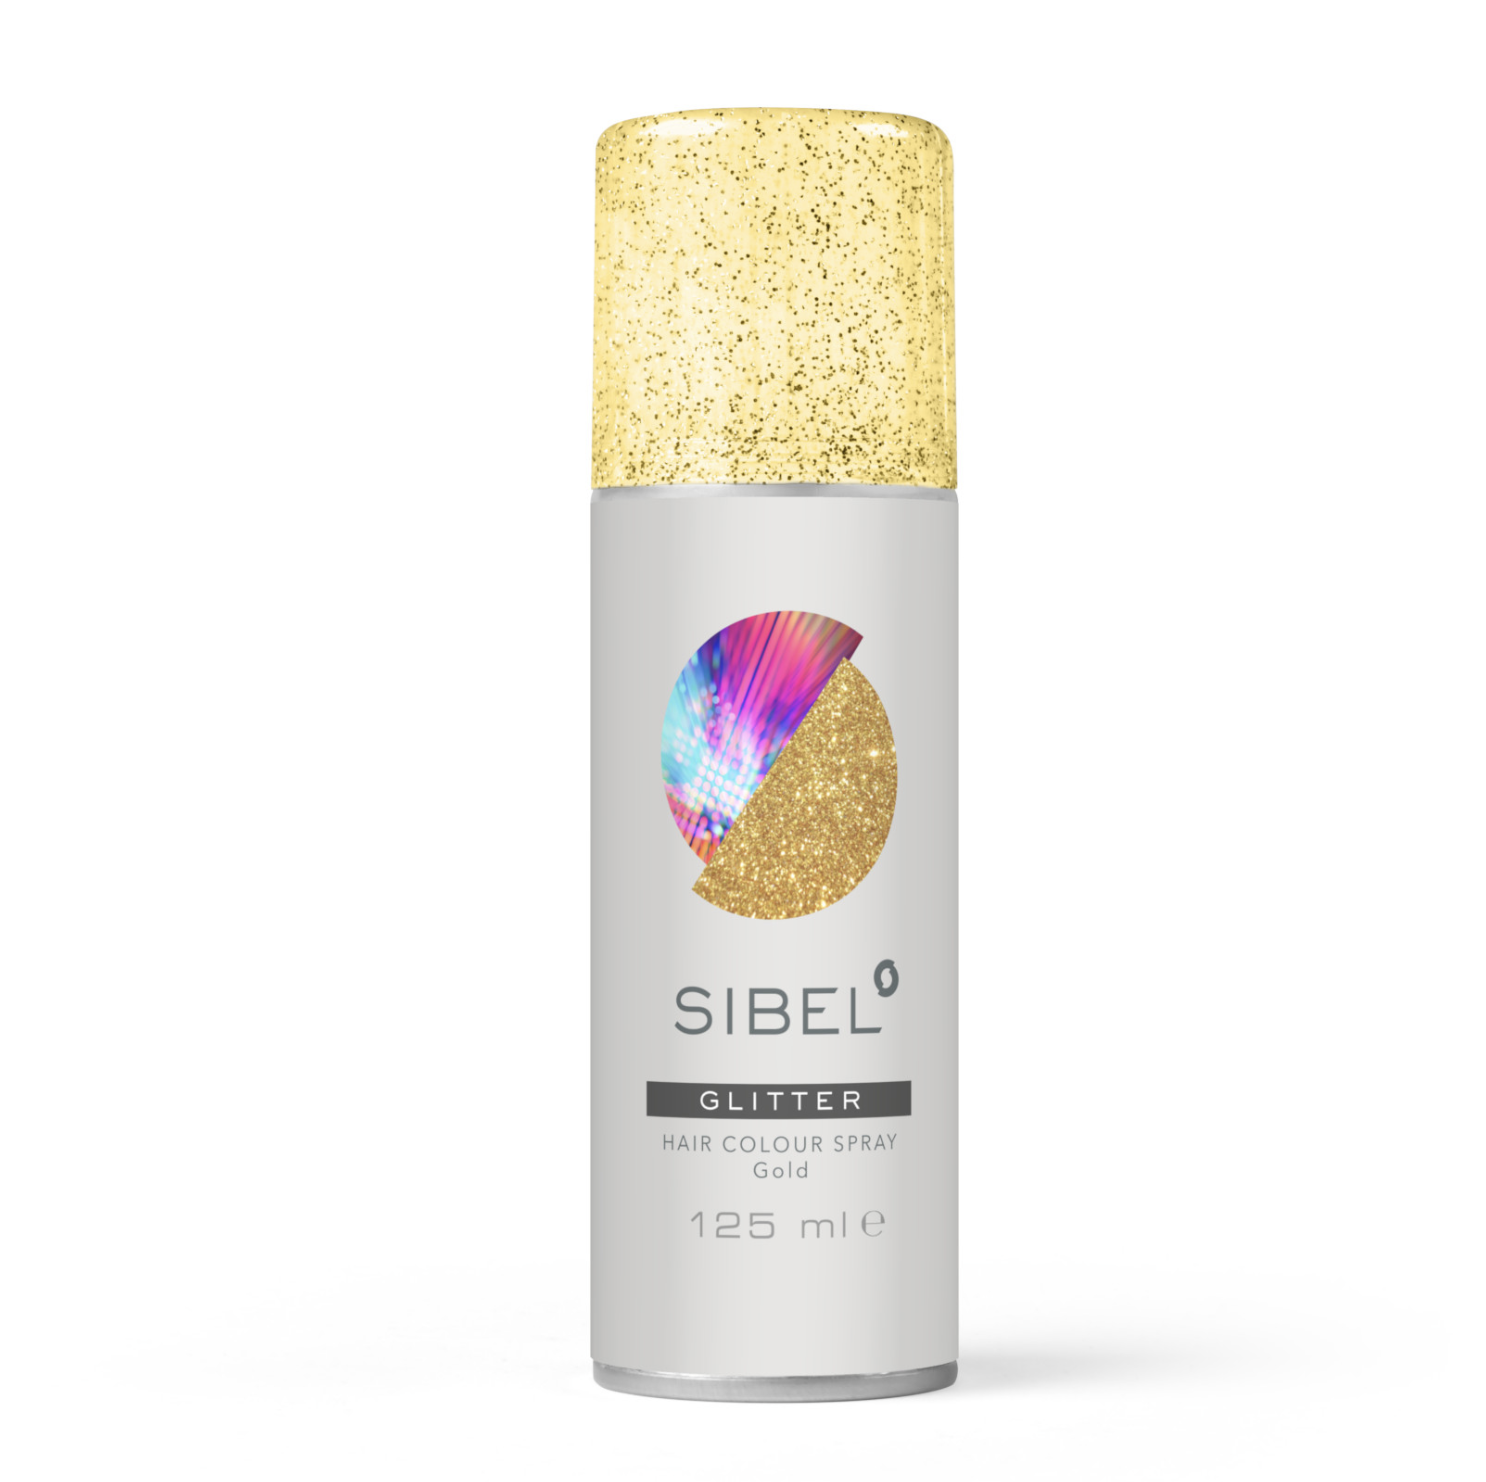 Třpytivý sprej na vlasy Sibel - zlaté třpytky